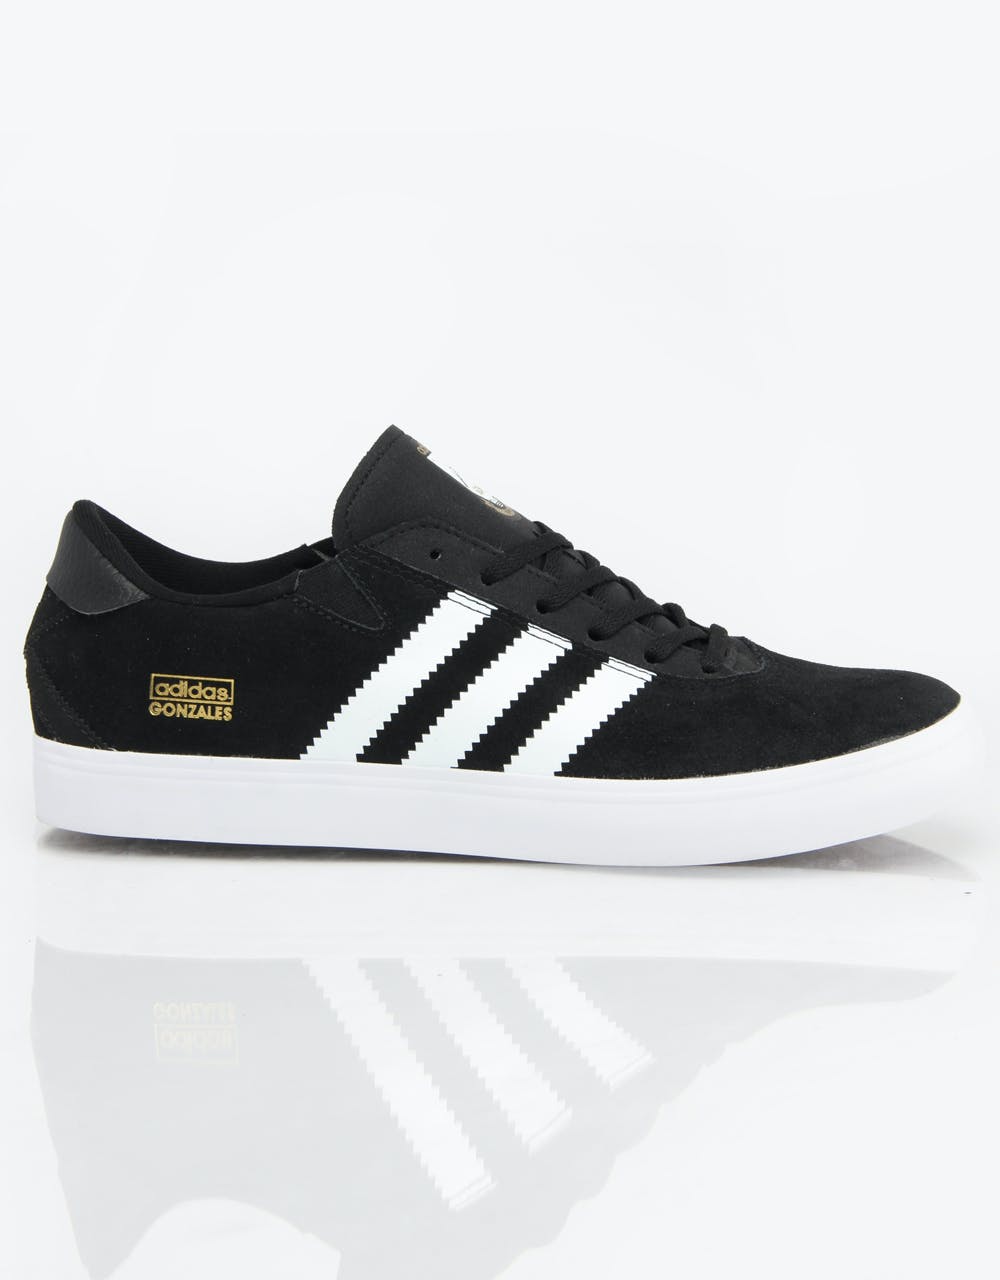 Adidas Gonz Pro Skate Shoes - Black/White/Black